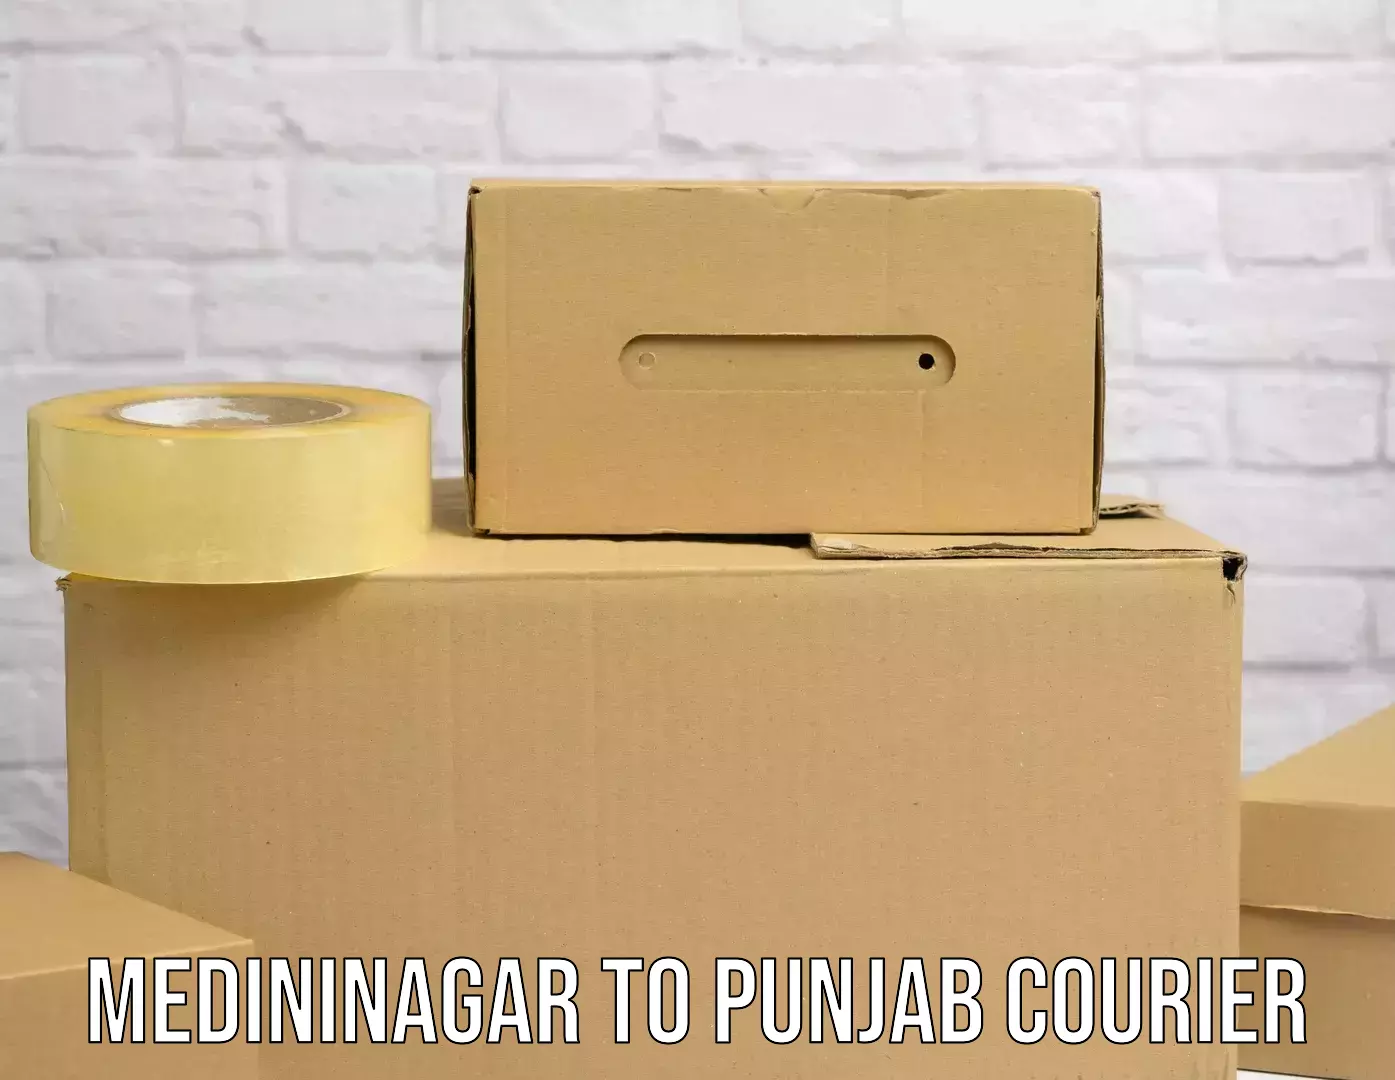 Expedited parcel delivery in Medininagar to Punjab